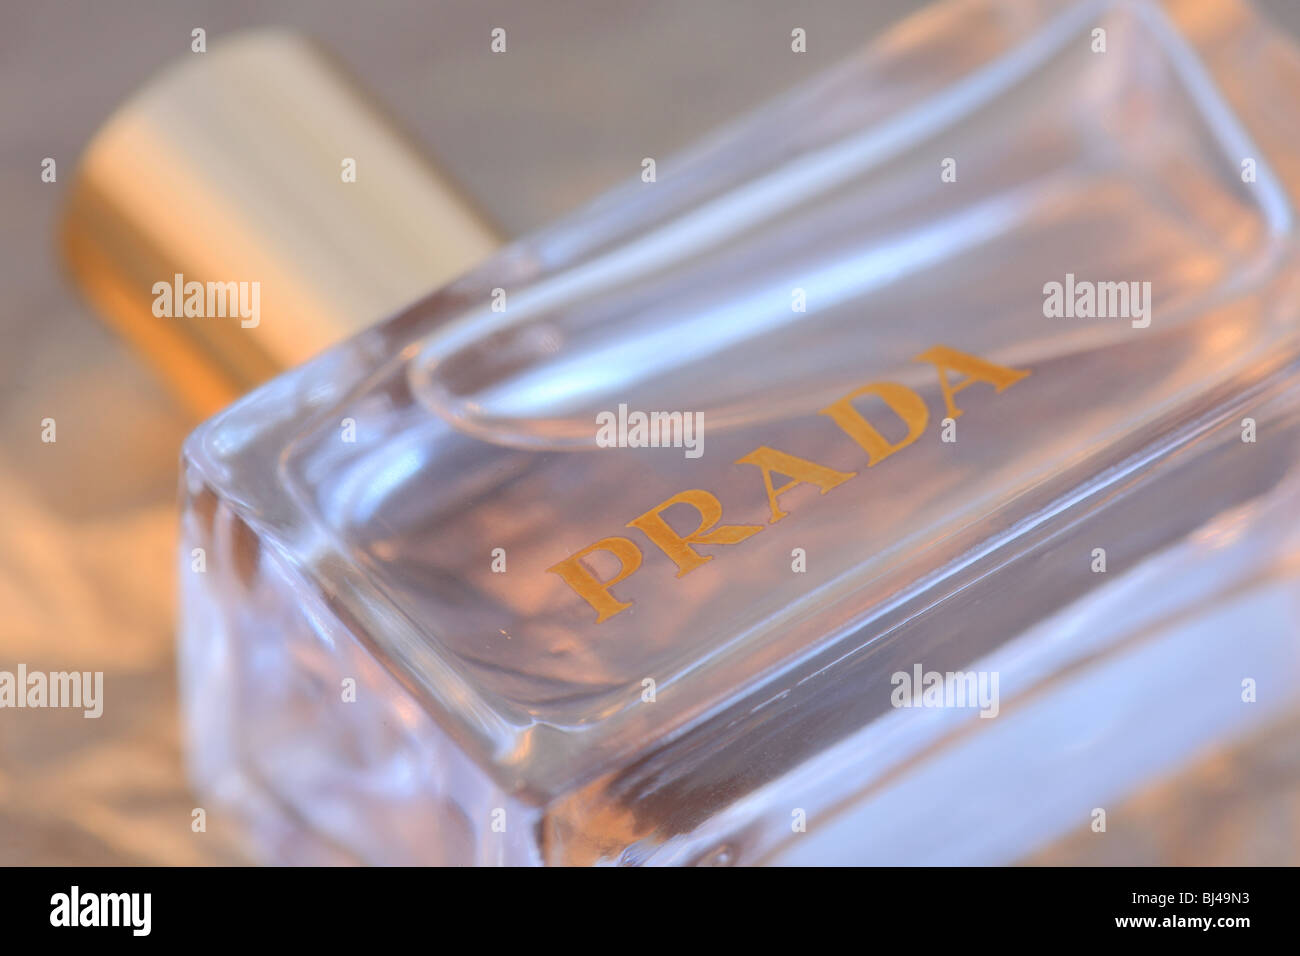 Prada perfume bottle Stock Photo - Alamy